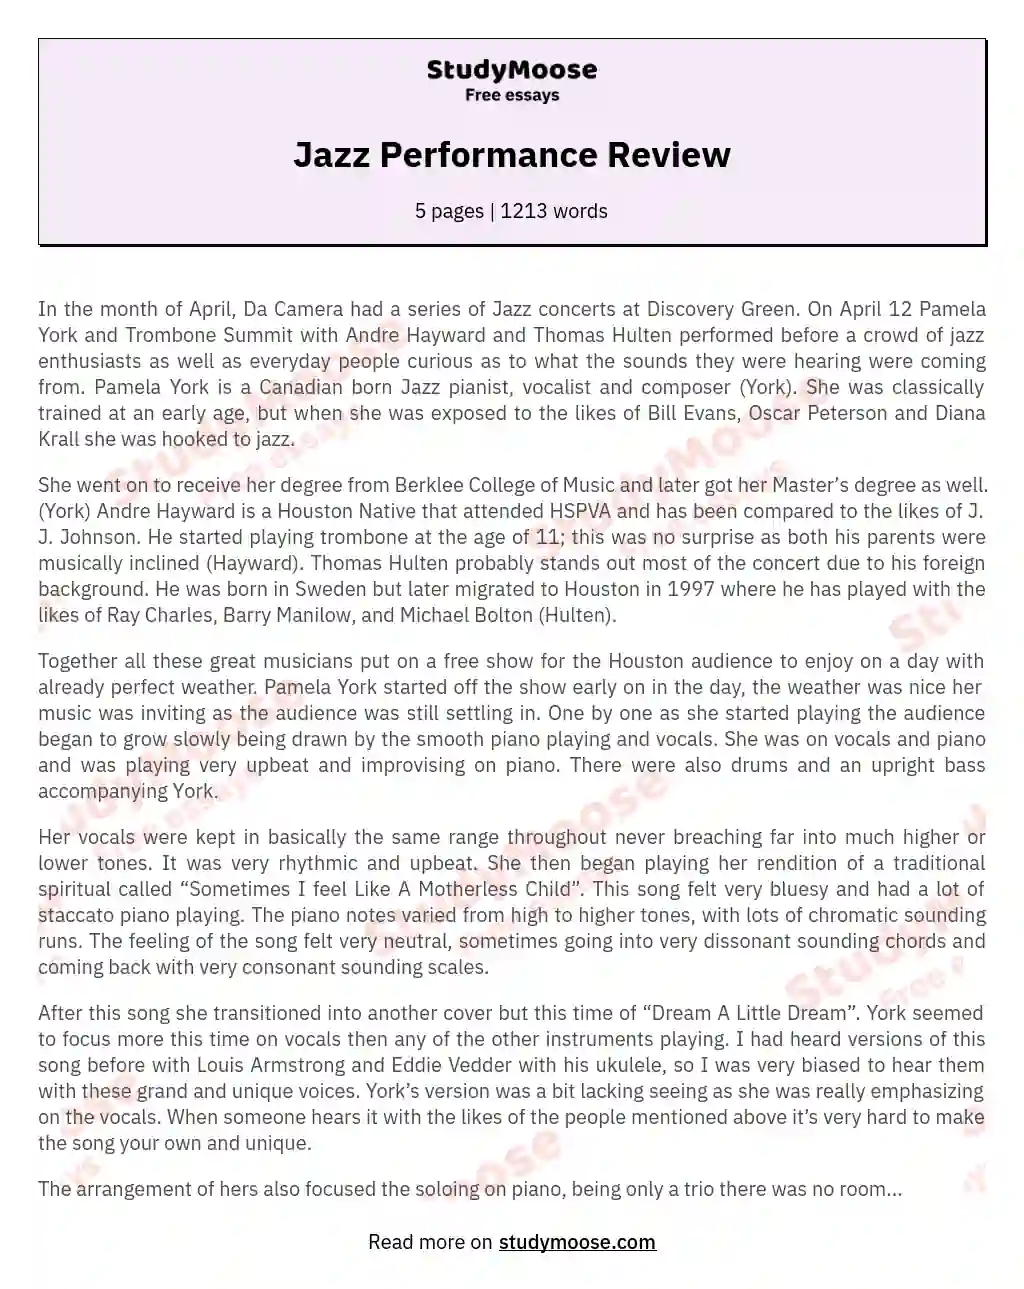 Jazz Performance Review essay